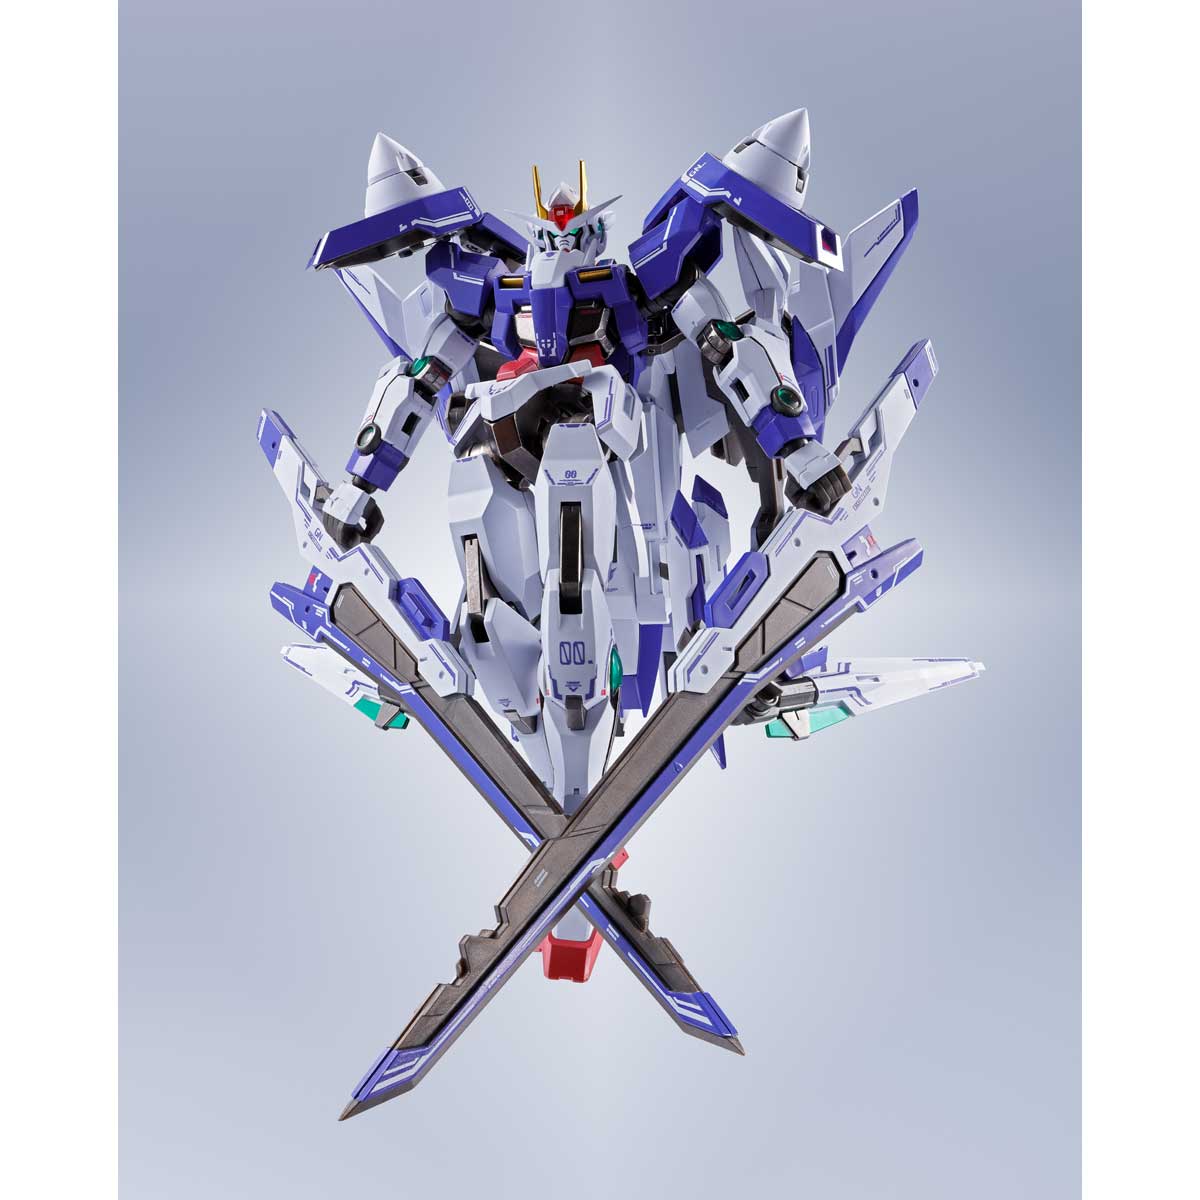 Metal Robot Spirits Side Ms 00 raiser Seven Sword Gn Sword Blaster Set Gundam Premium Bandai Usa Online Store For Action Figures Model Kits Toys And More